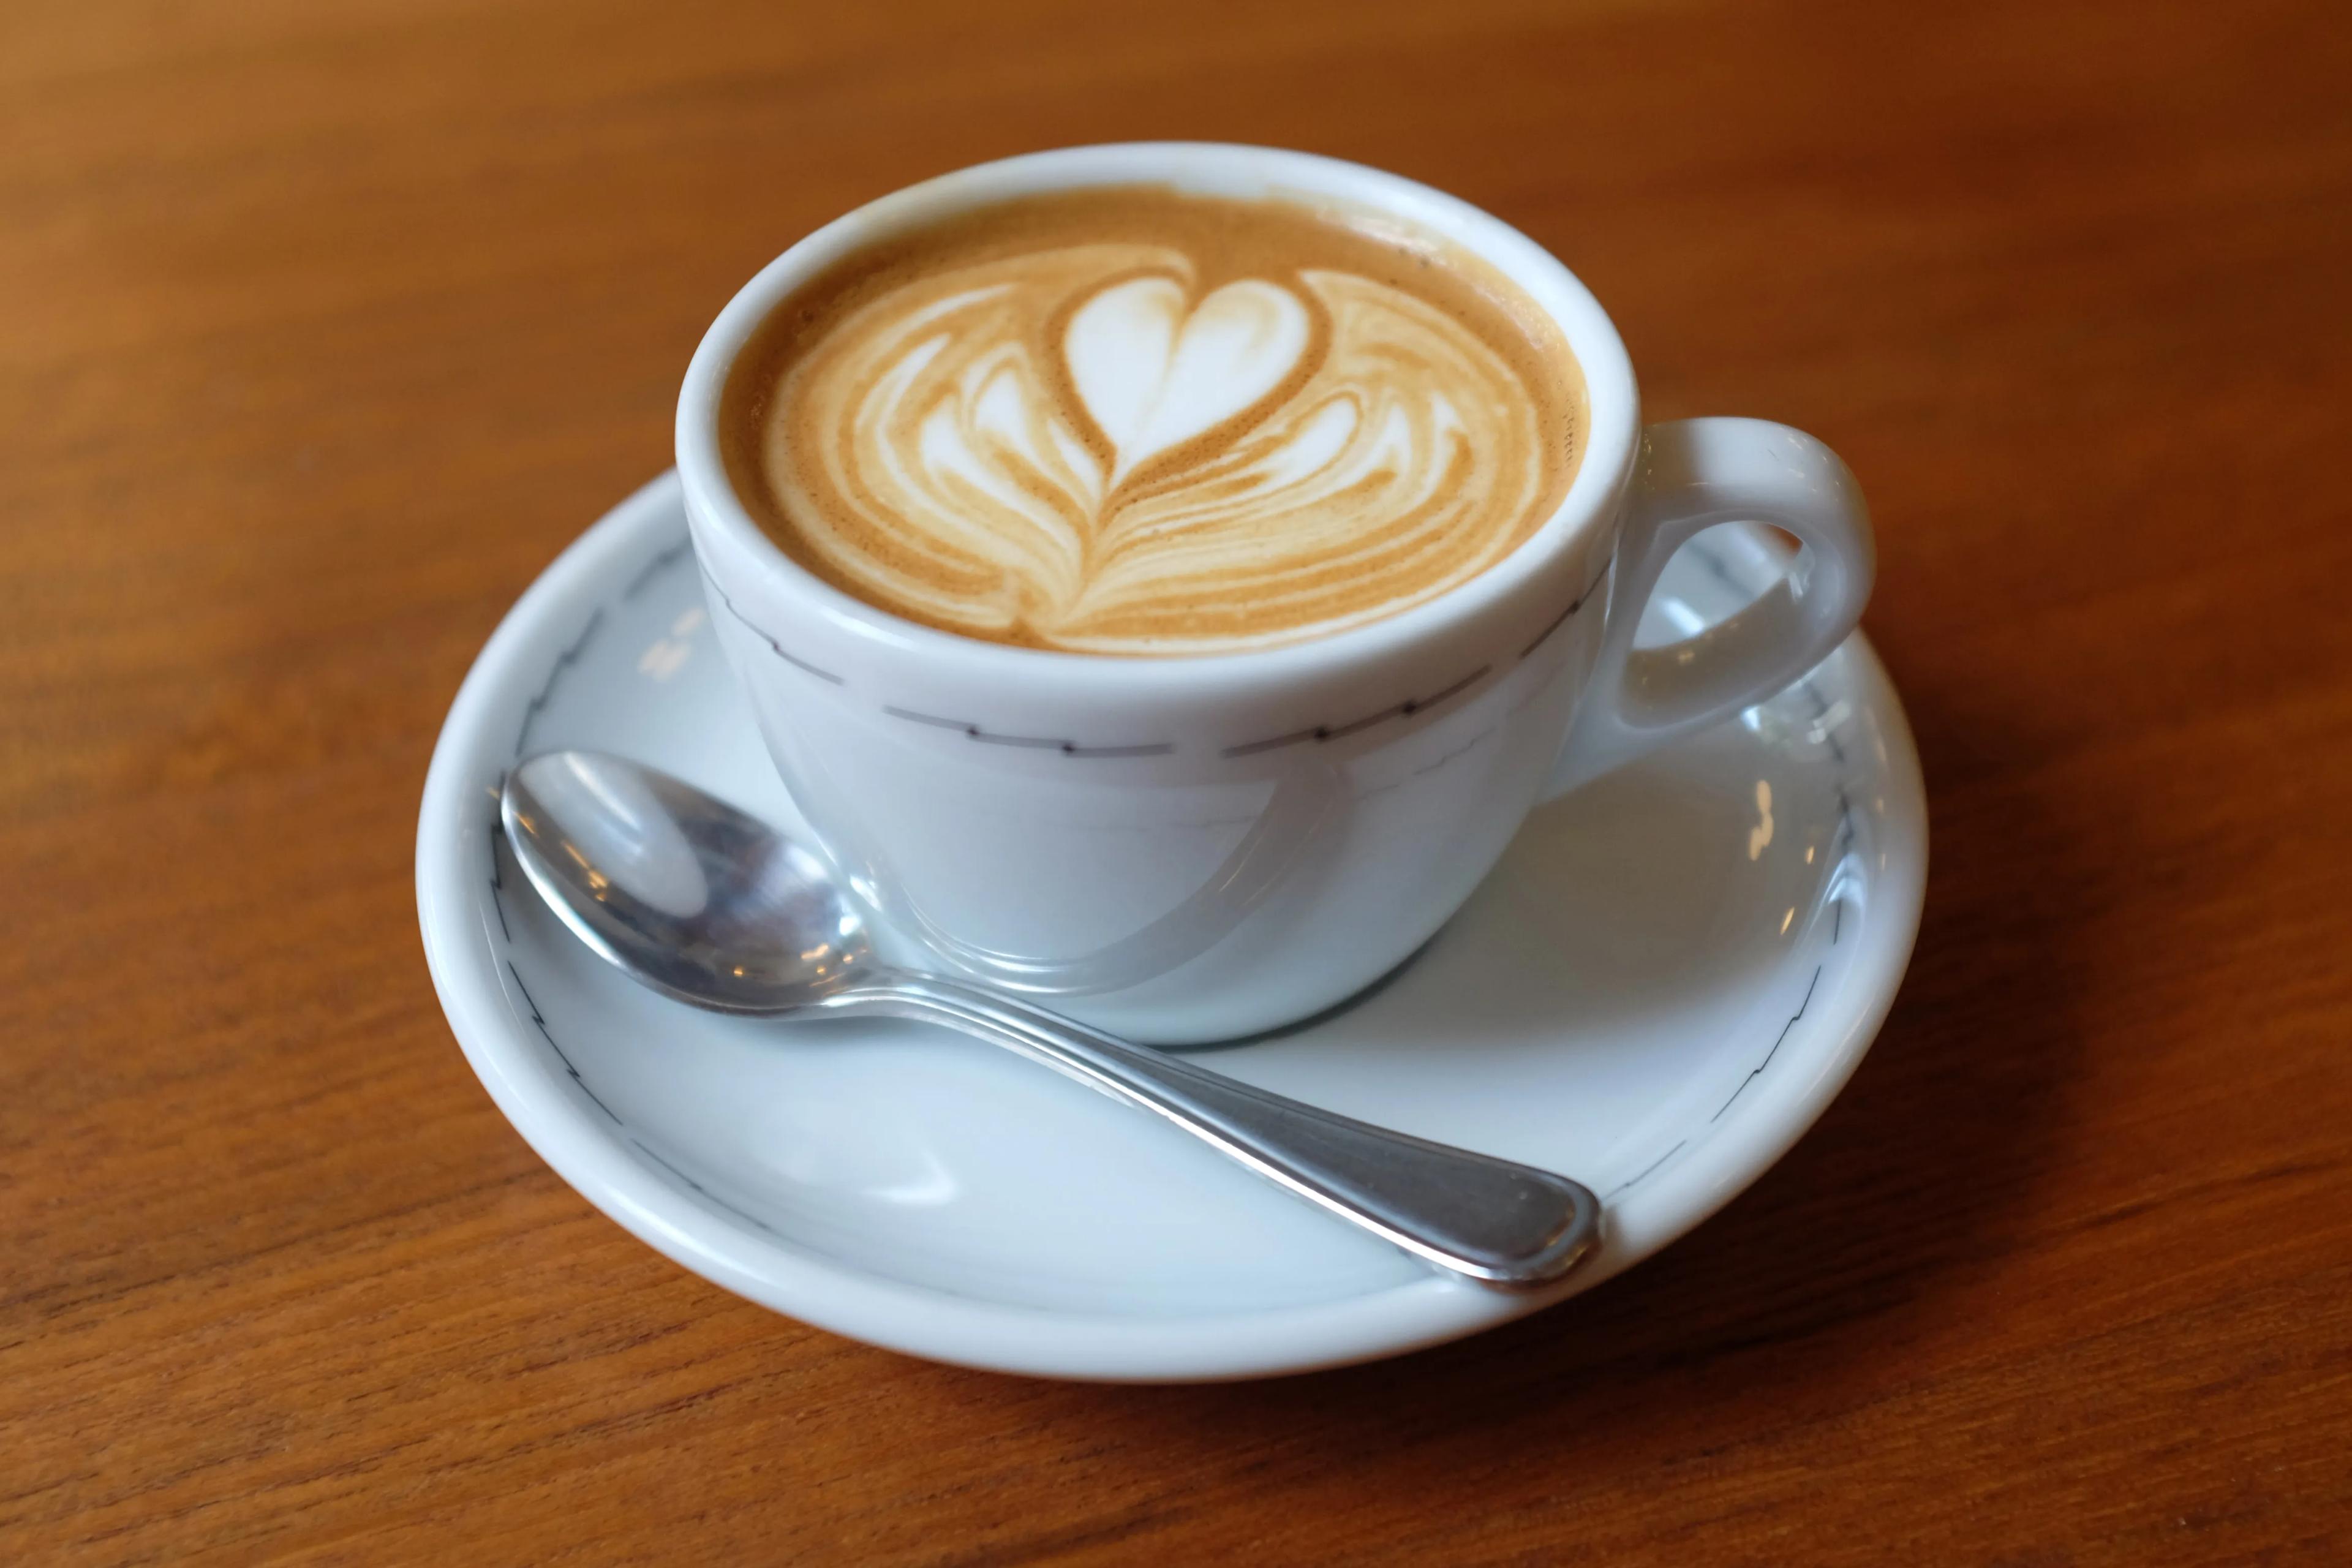 File:Cappuccino at Sightglass Coffee.jpg - Wikimedia Commons